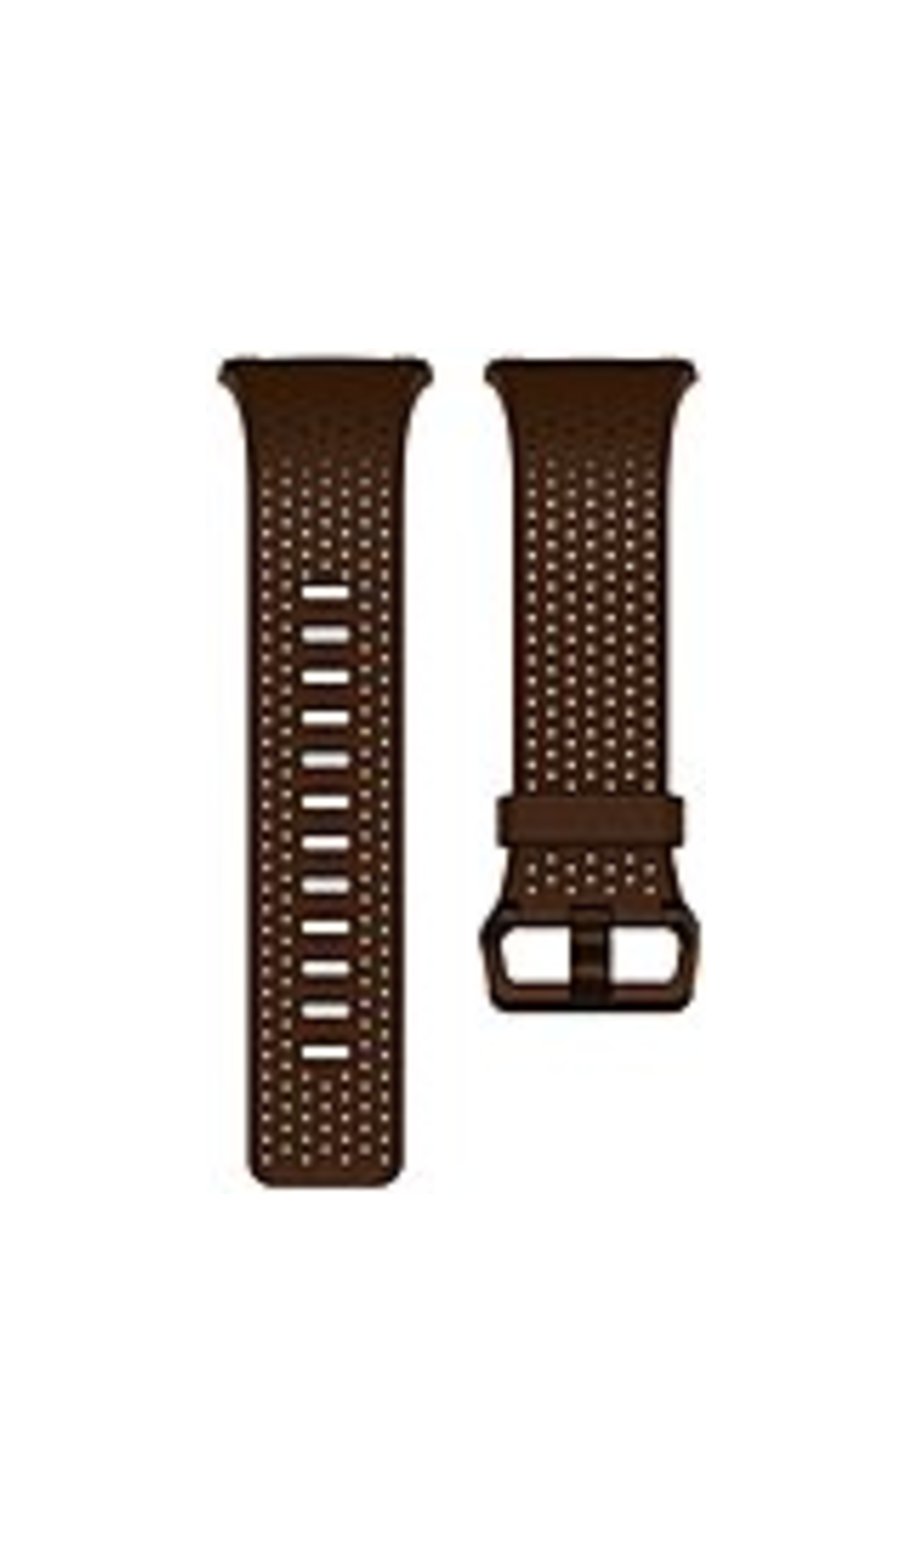 Fitbit Smartwatch Band - Cognac - Leather, Aluminum